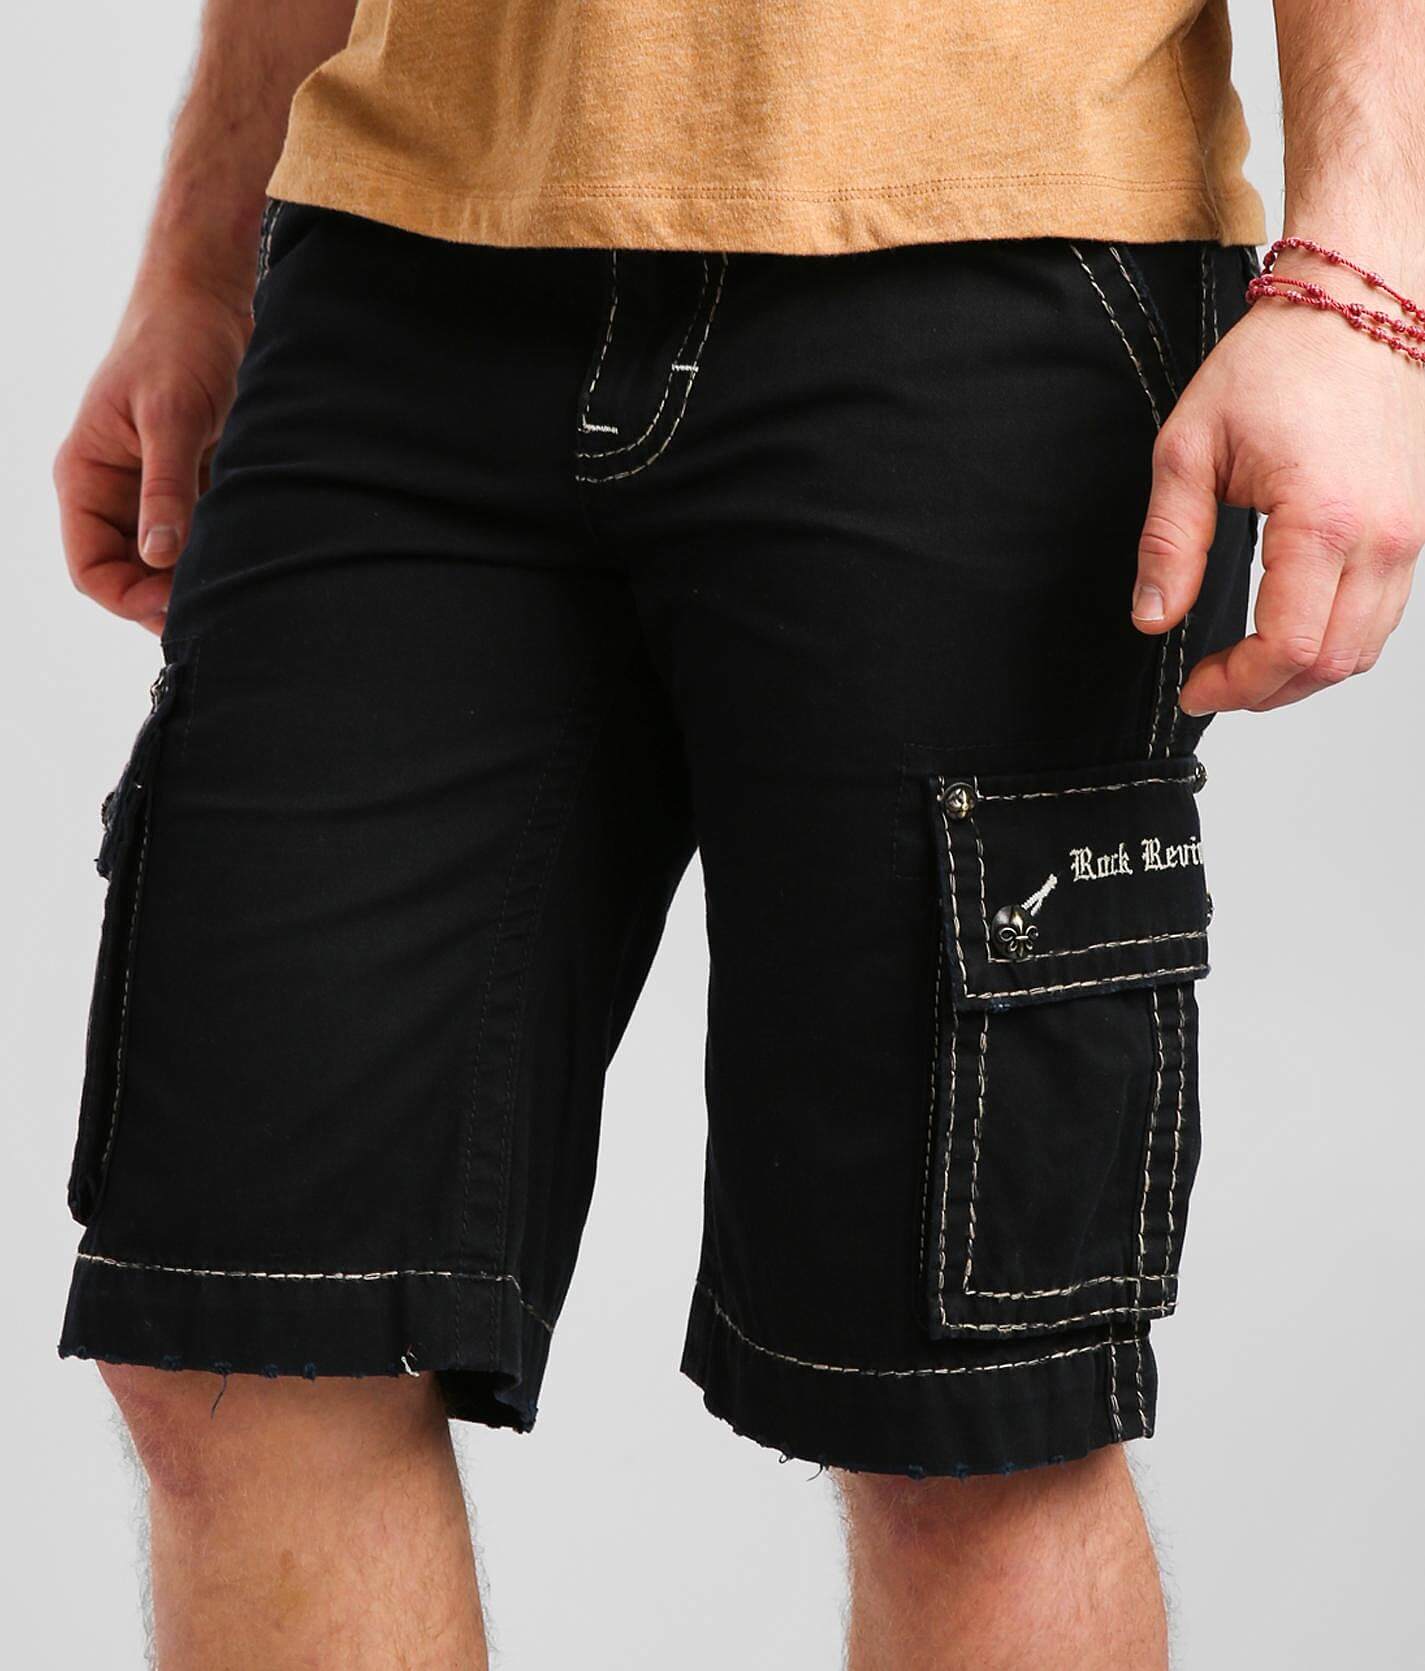 Rock Revival Classic Cargo Short - Men's Shorts in Black | Buckle